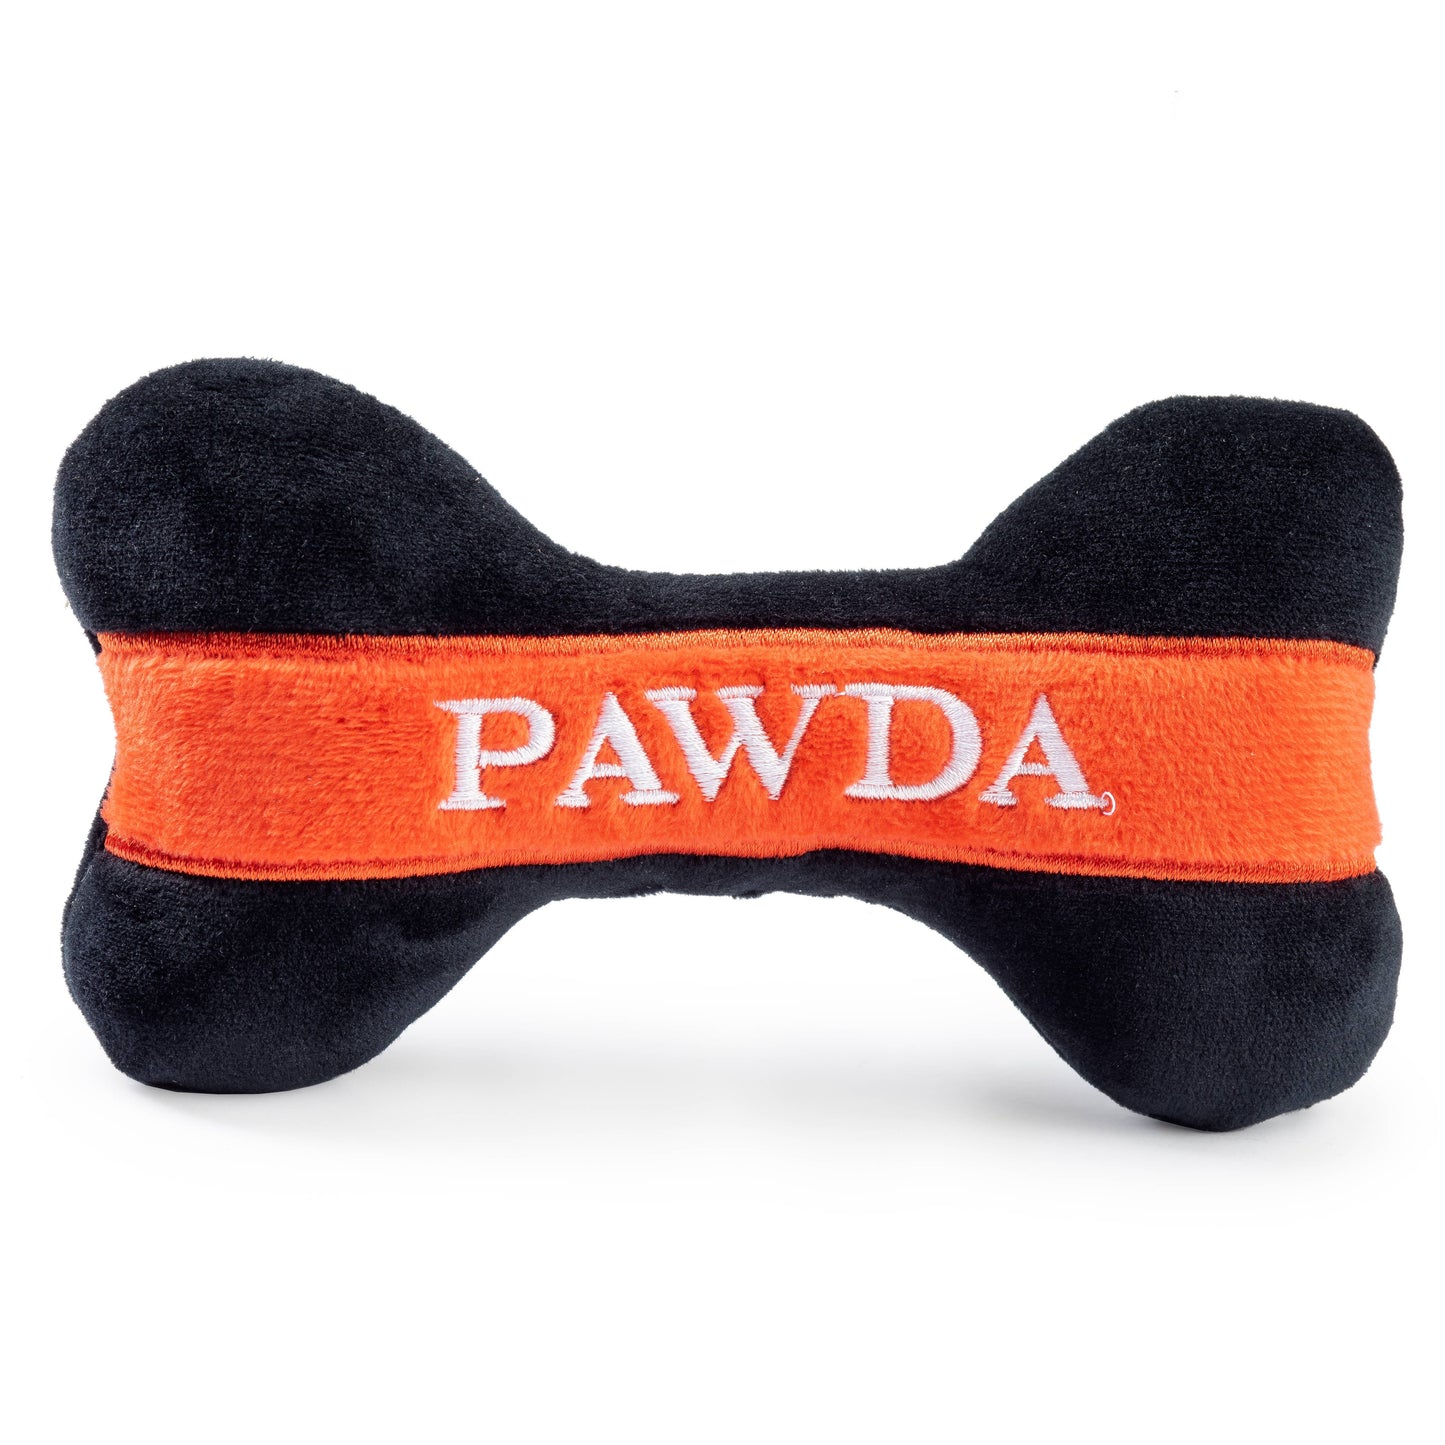 The Pawda Bone Squeaker Dog Toy